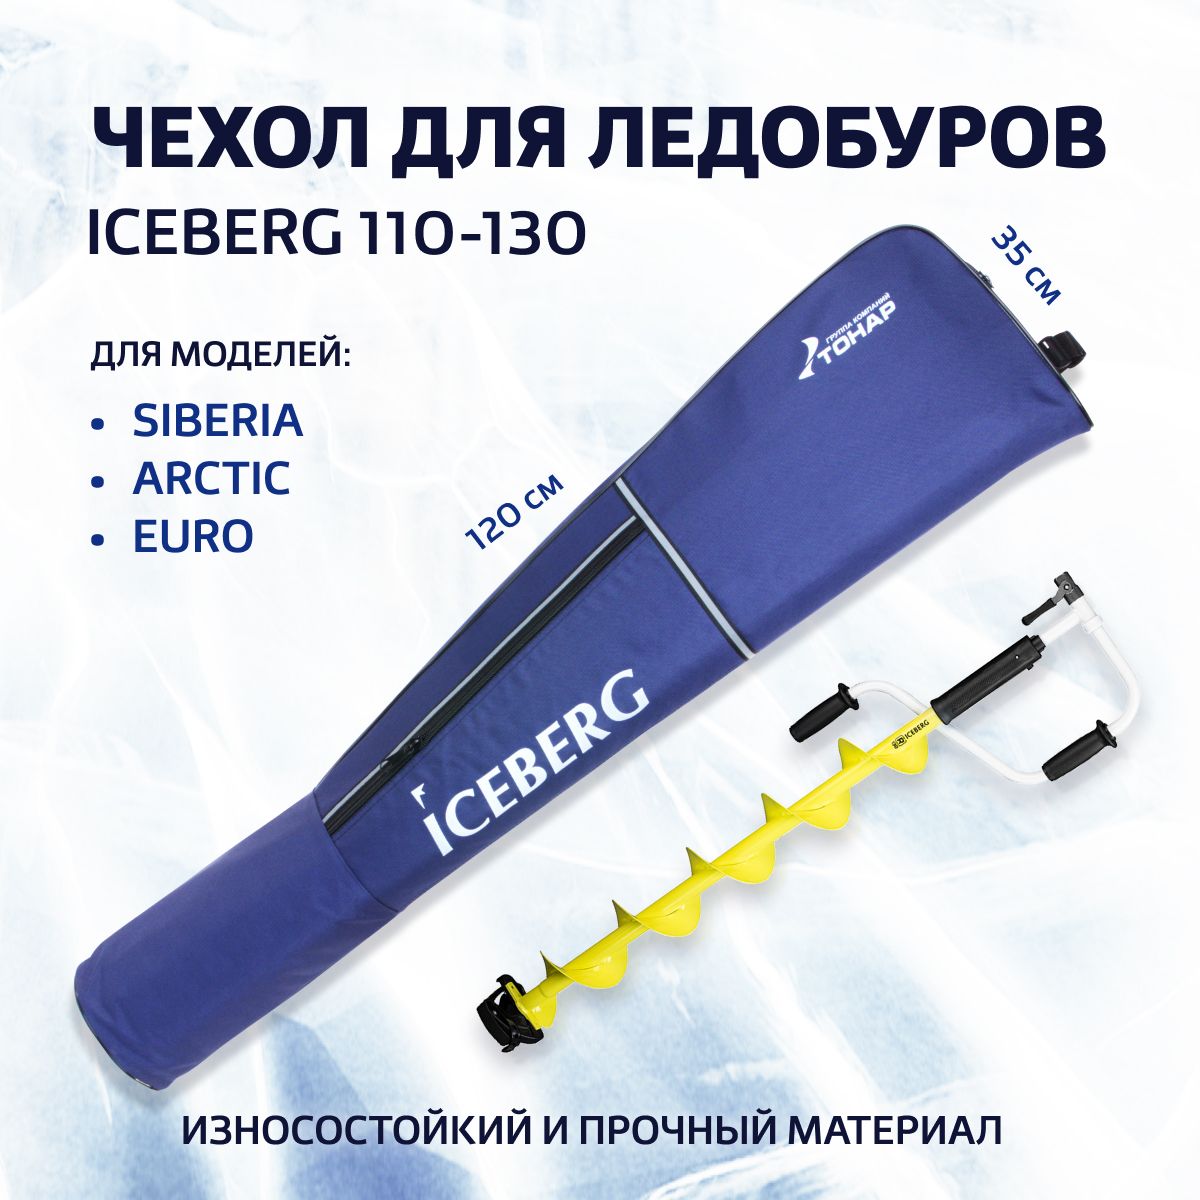 Чехол для ледобура ICEBERG 110-130 (T-TB-I-110-130)